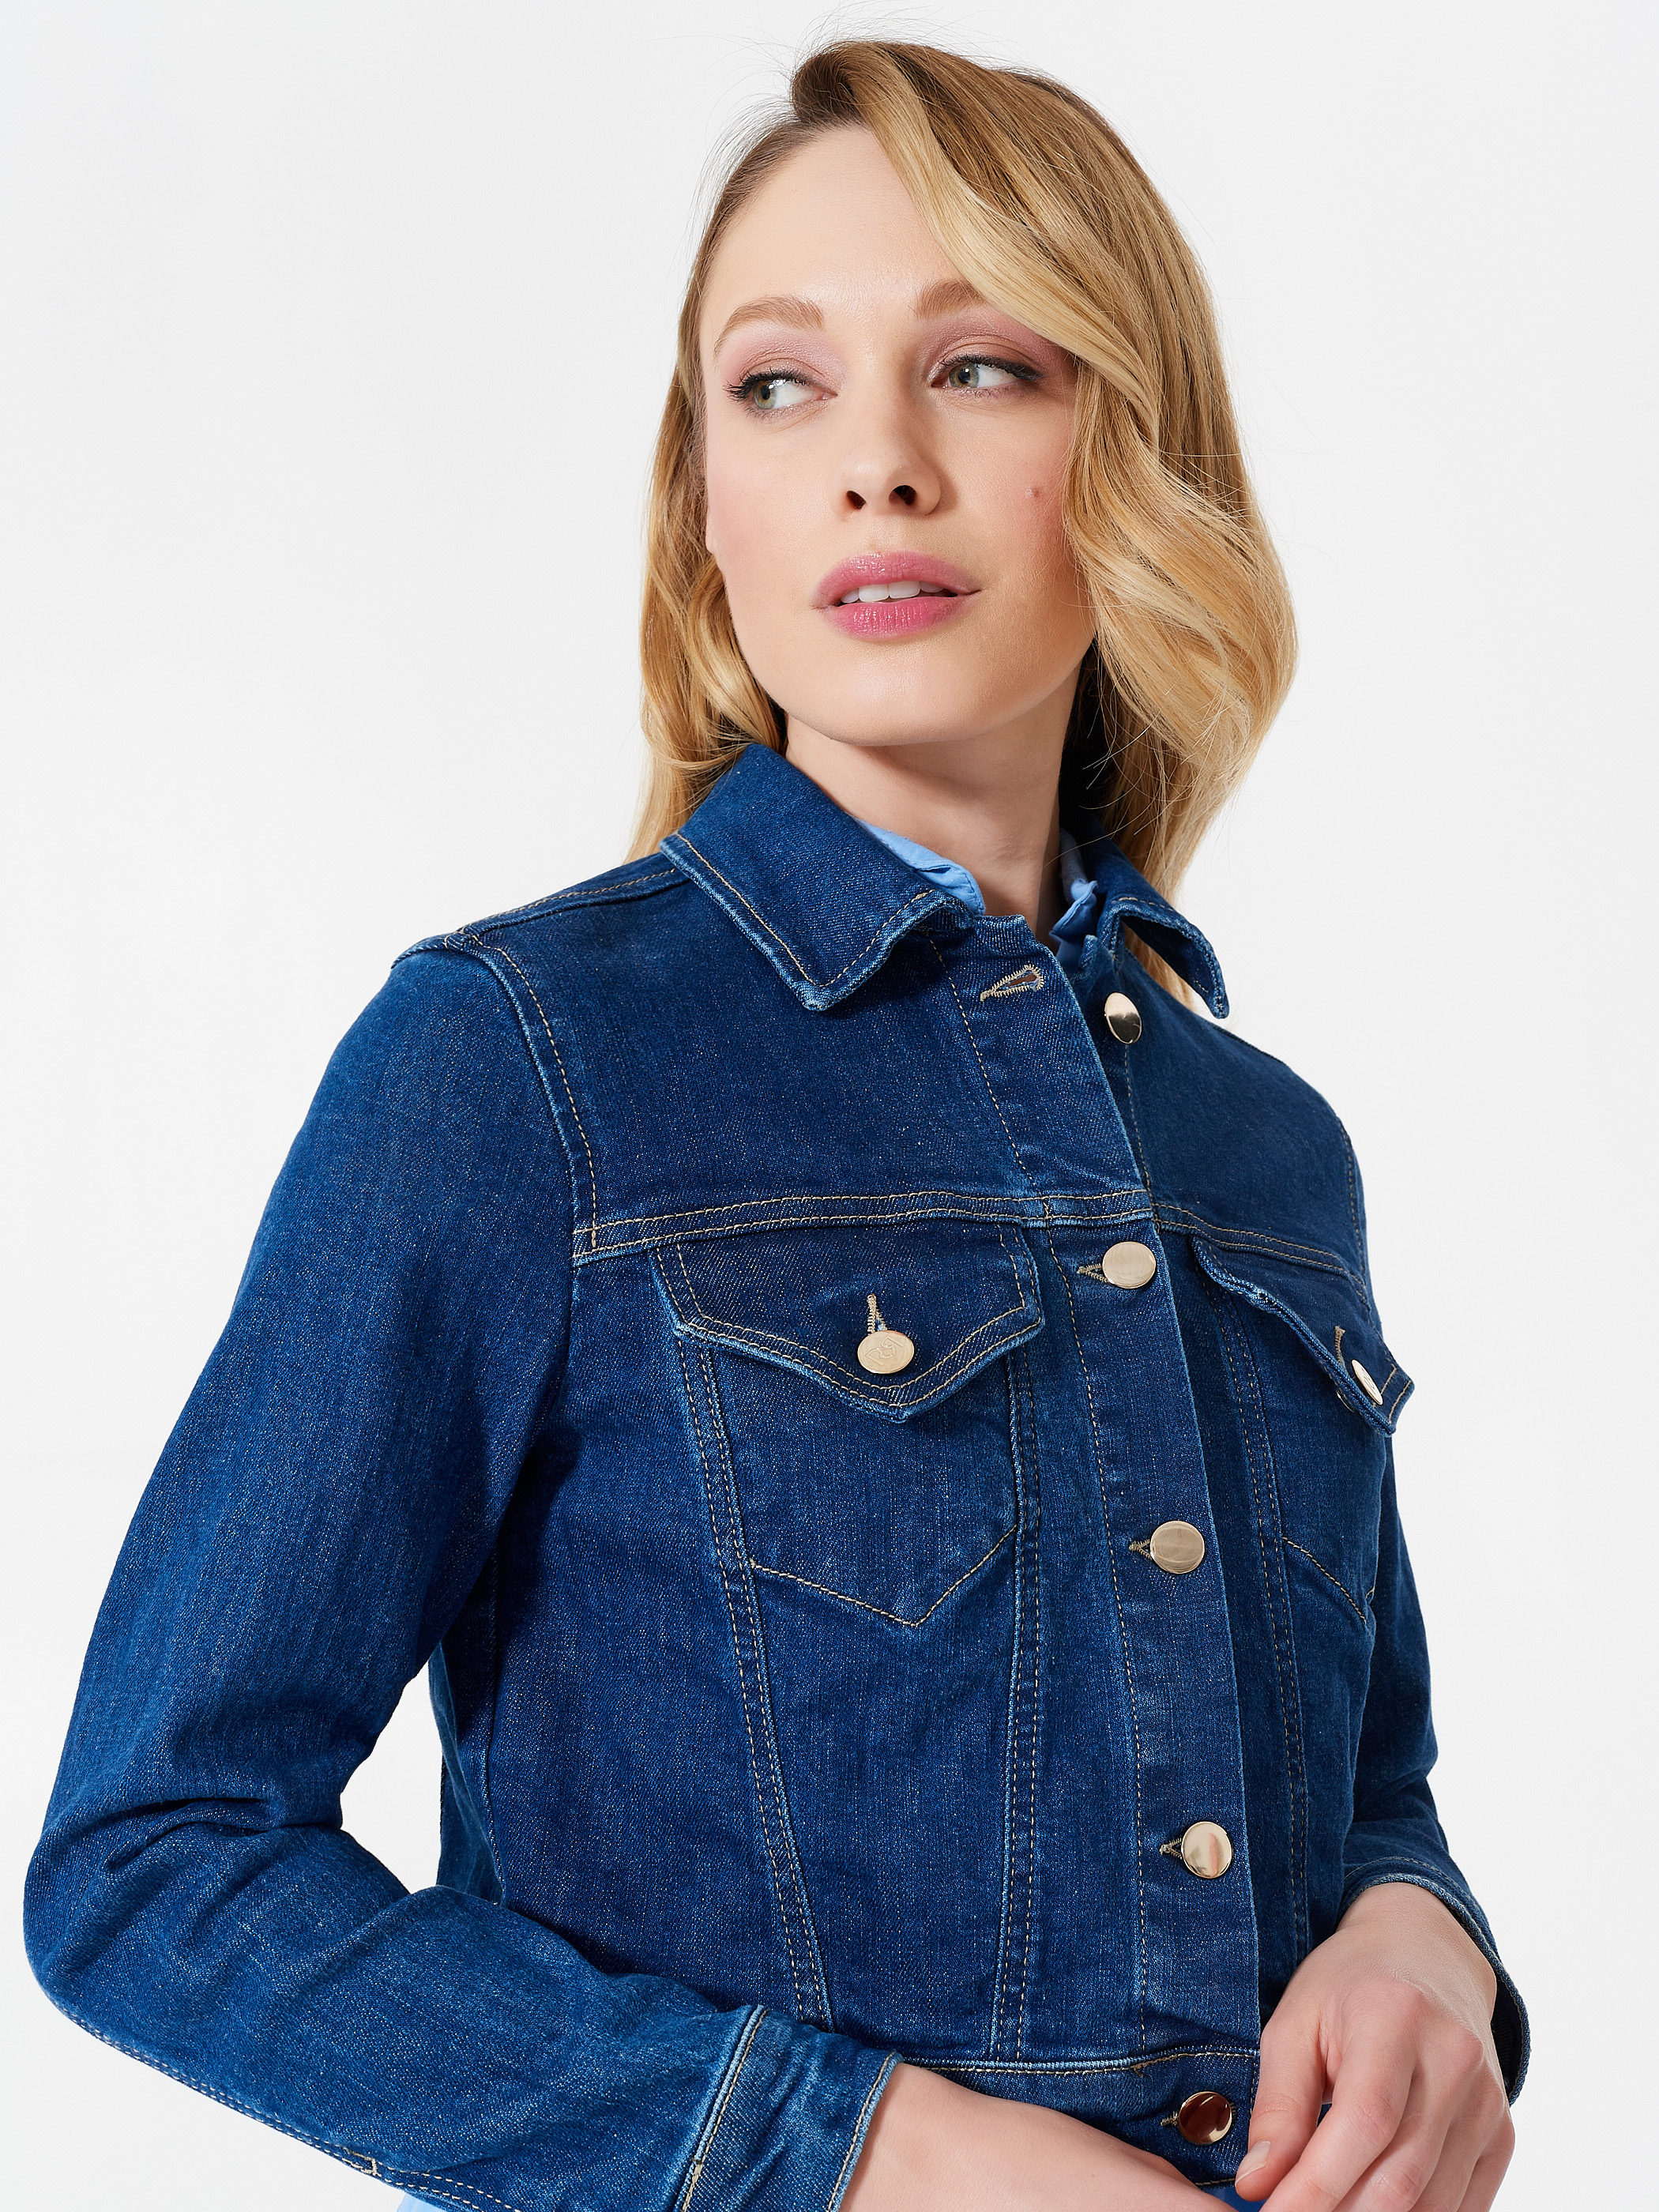 Jeans jacket | Light blue | Women | Rinascimento